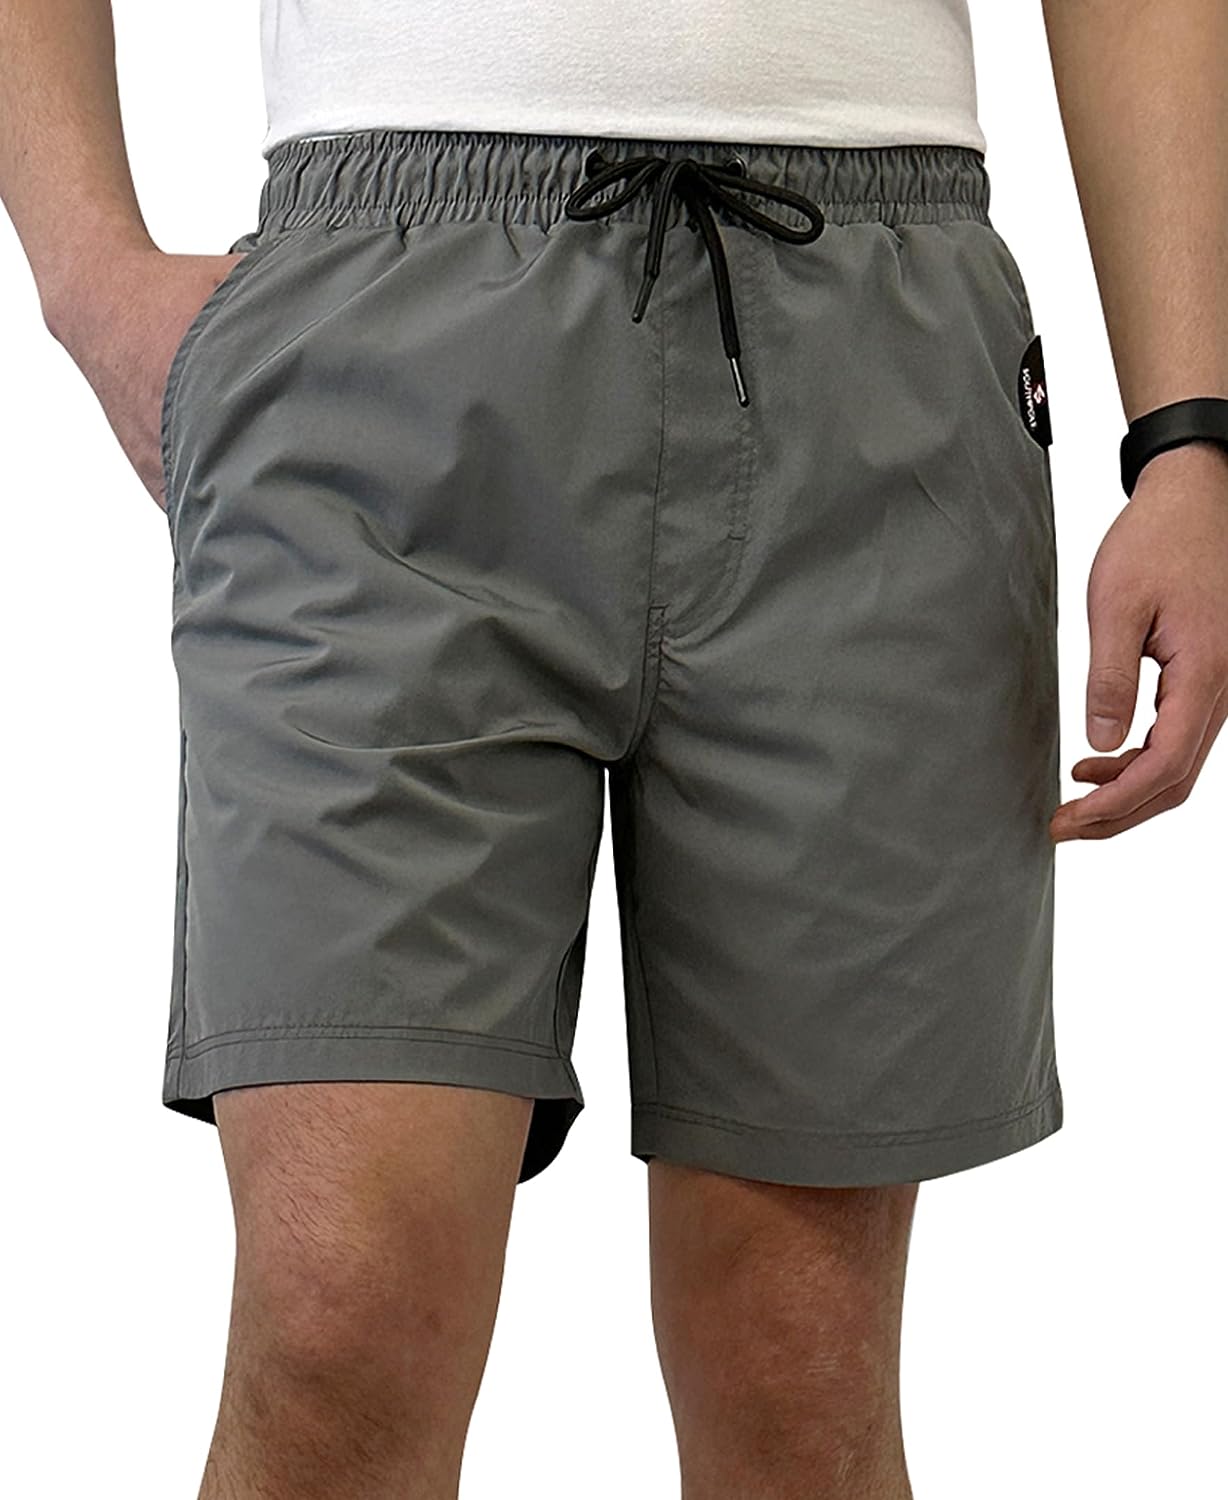 Nylon Shorts Mens WholeSale - Bulk Buy at Supplyleader.com